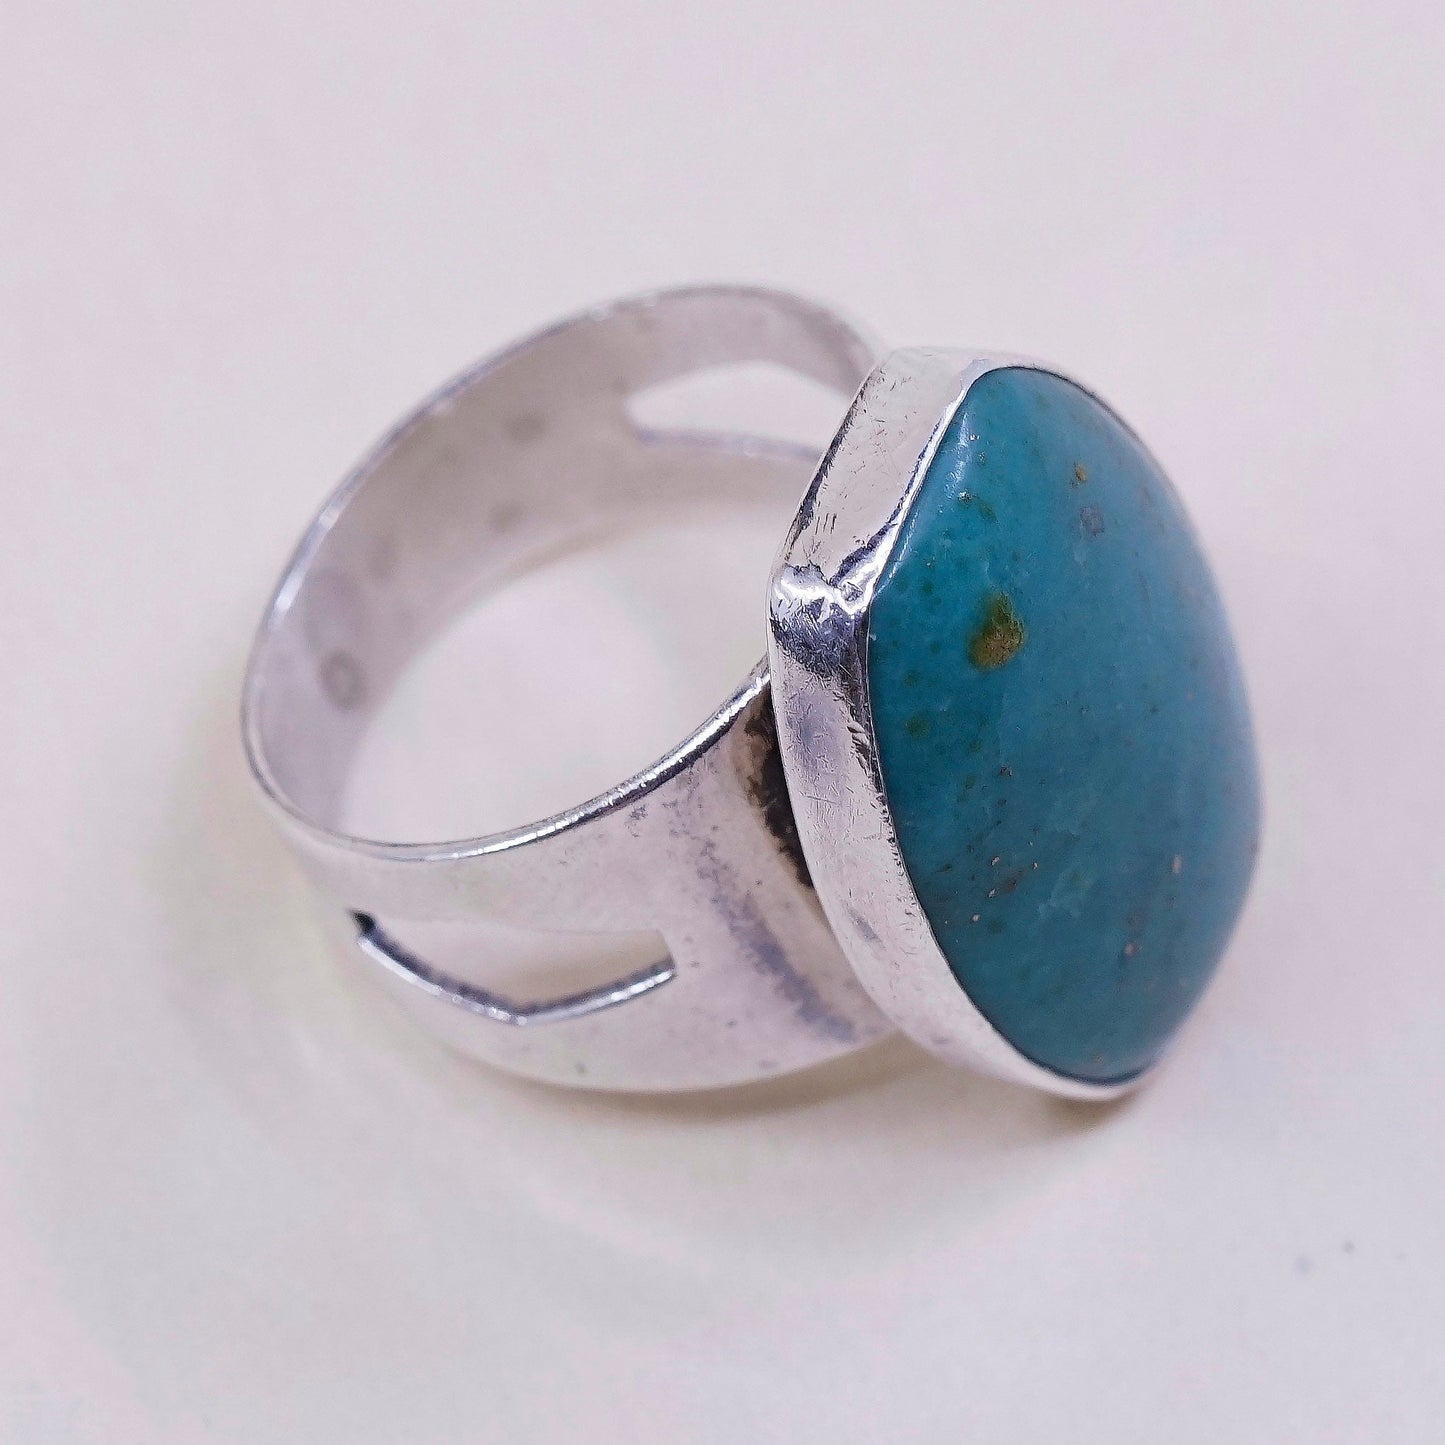 sz 7, VTG DTR sterling silver ring, handmade 925 ring w/ turquoise